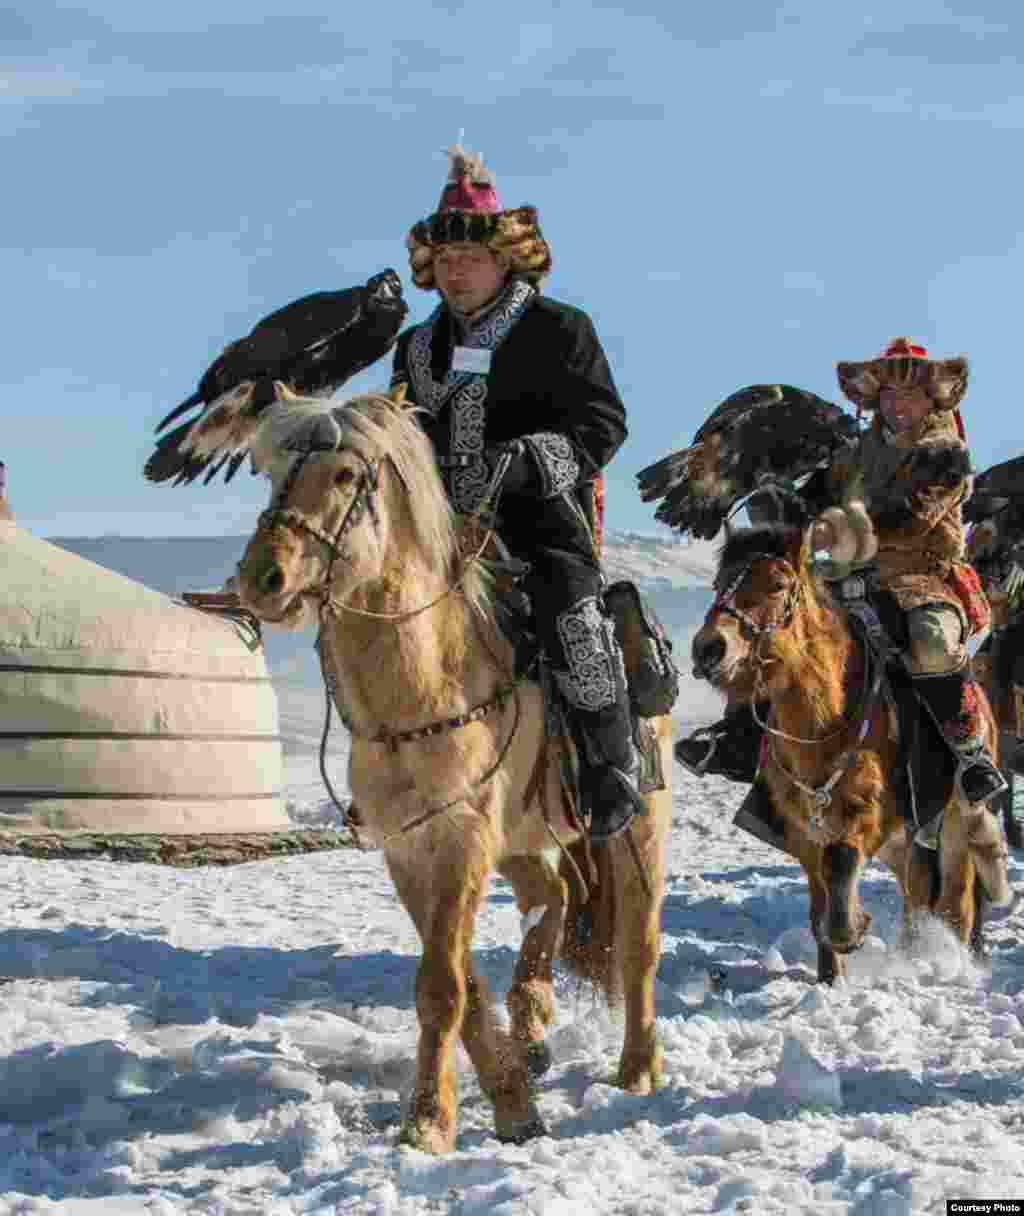 Казахи с ловчими птицами выехали на охоту. Баян-Улгийский район Монголии, 2014 год.